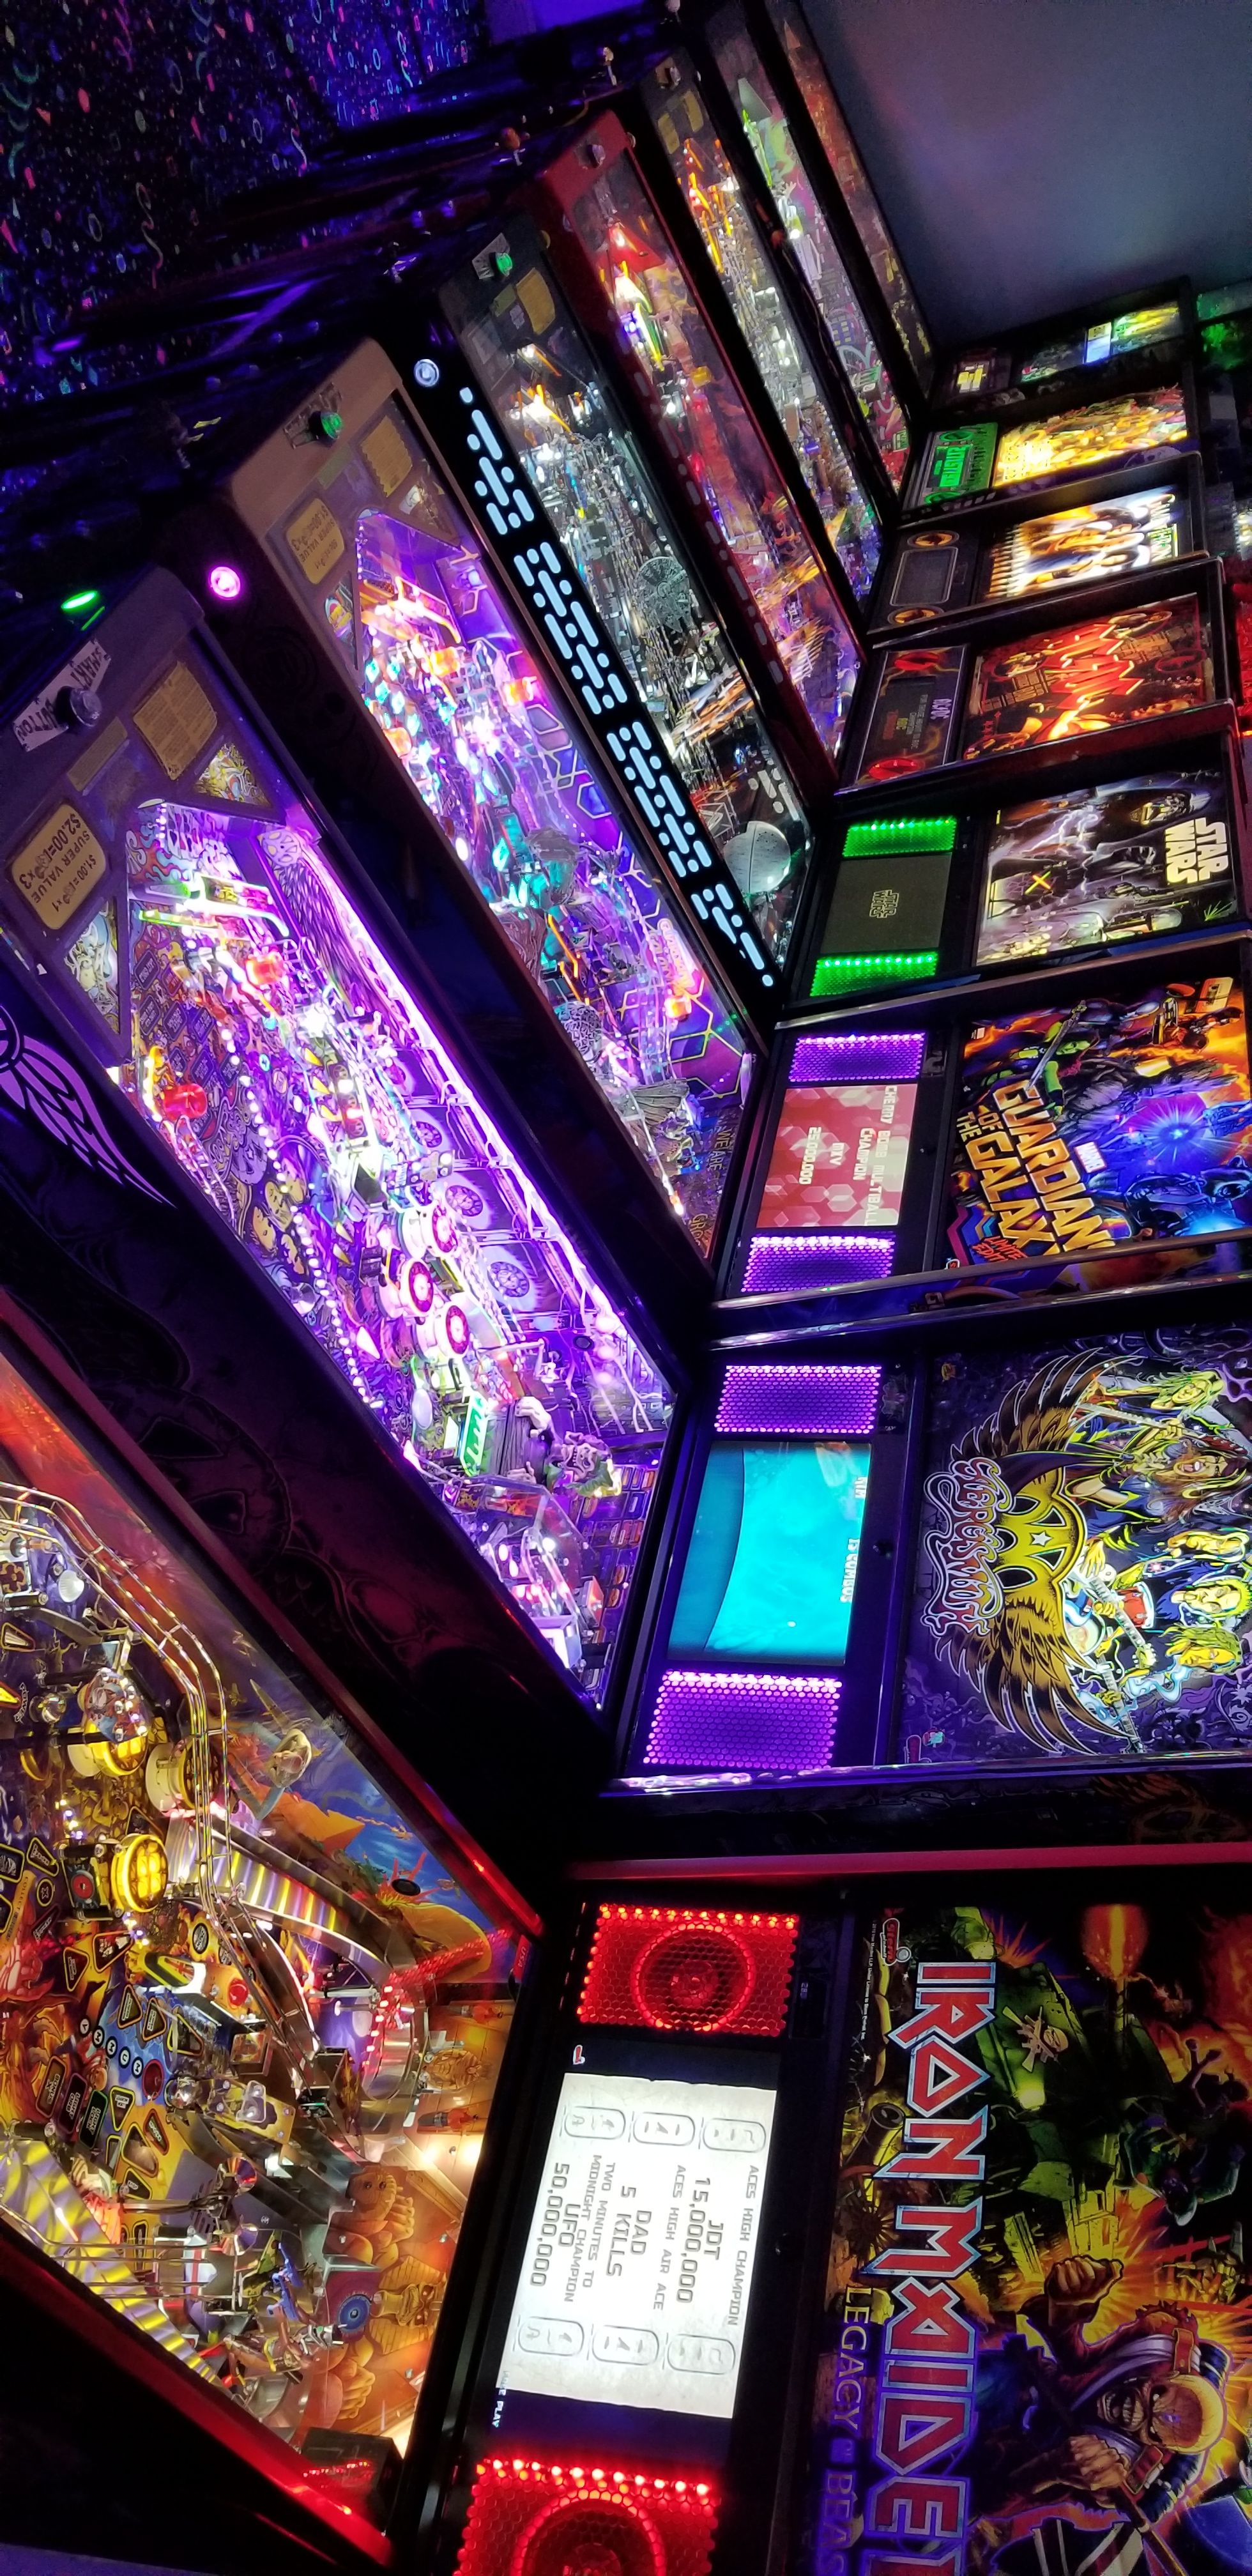 arcade games & pinball machines Must See !!!